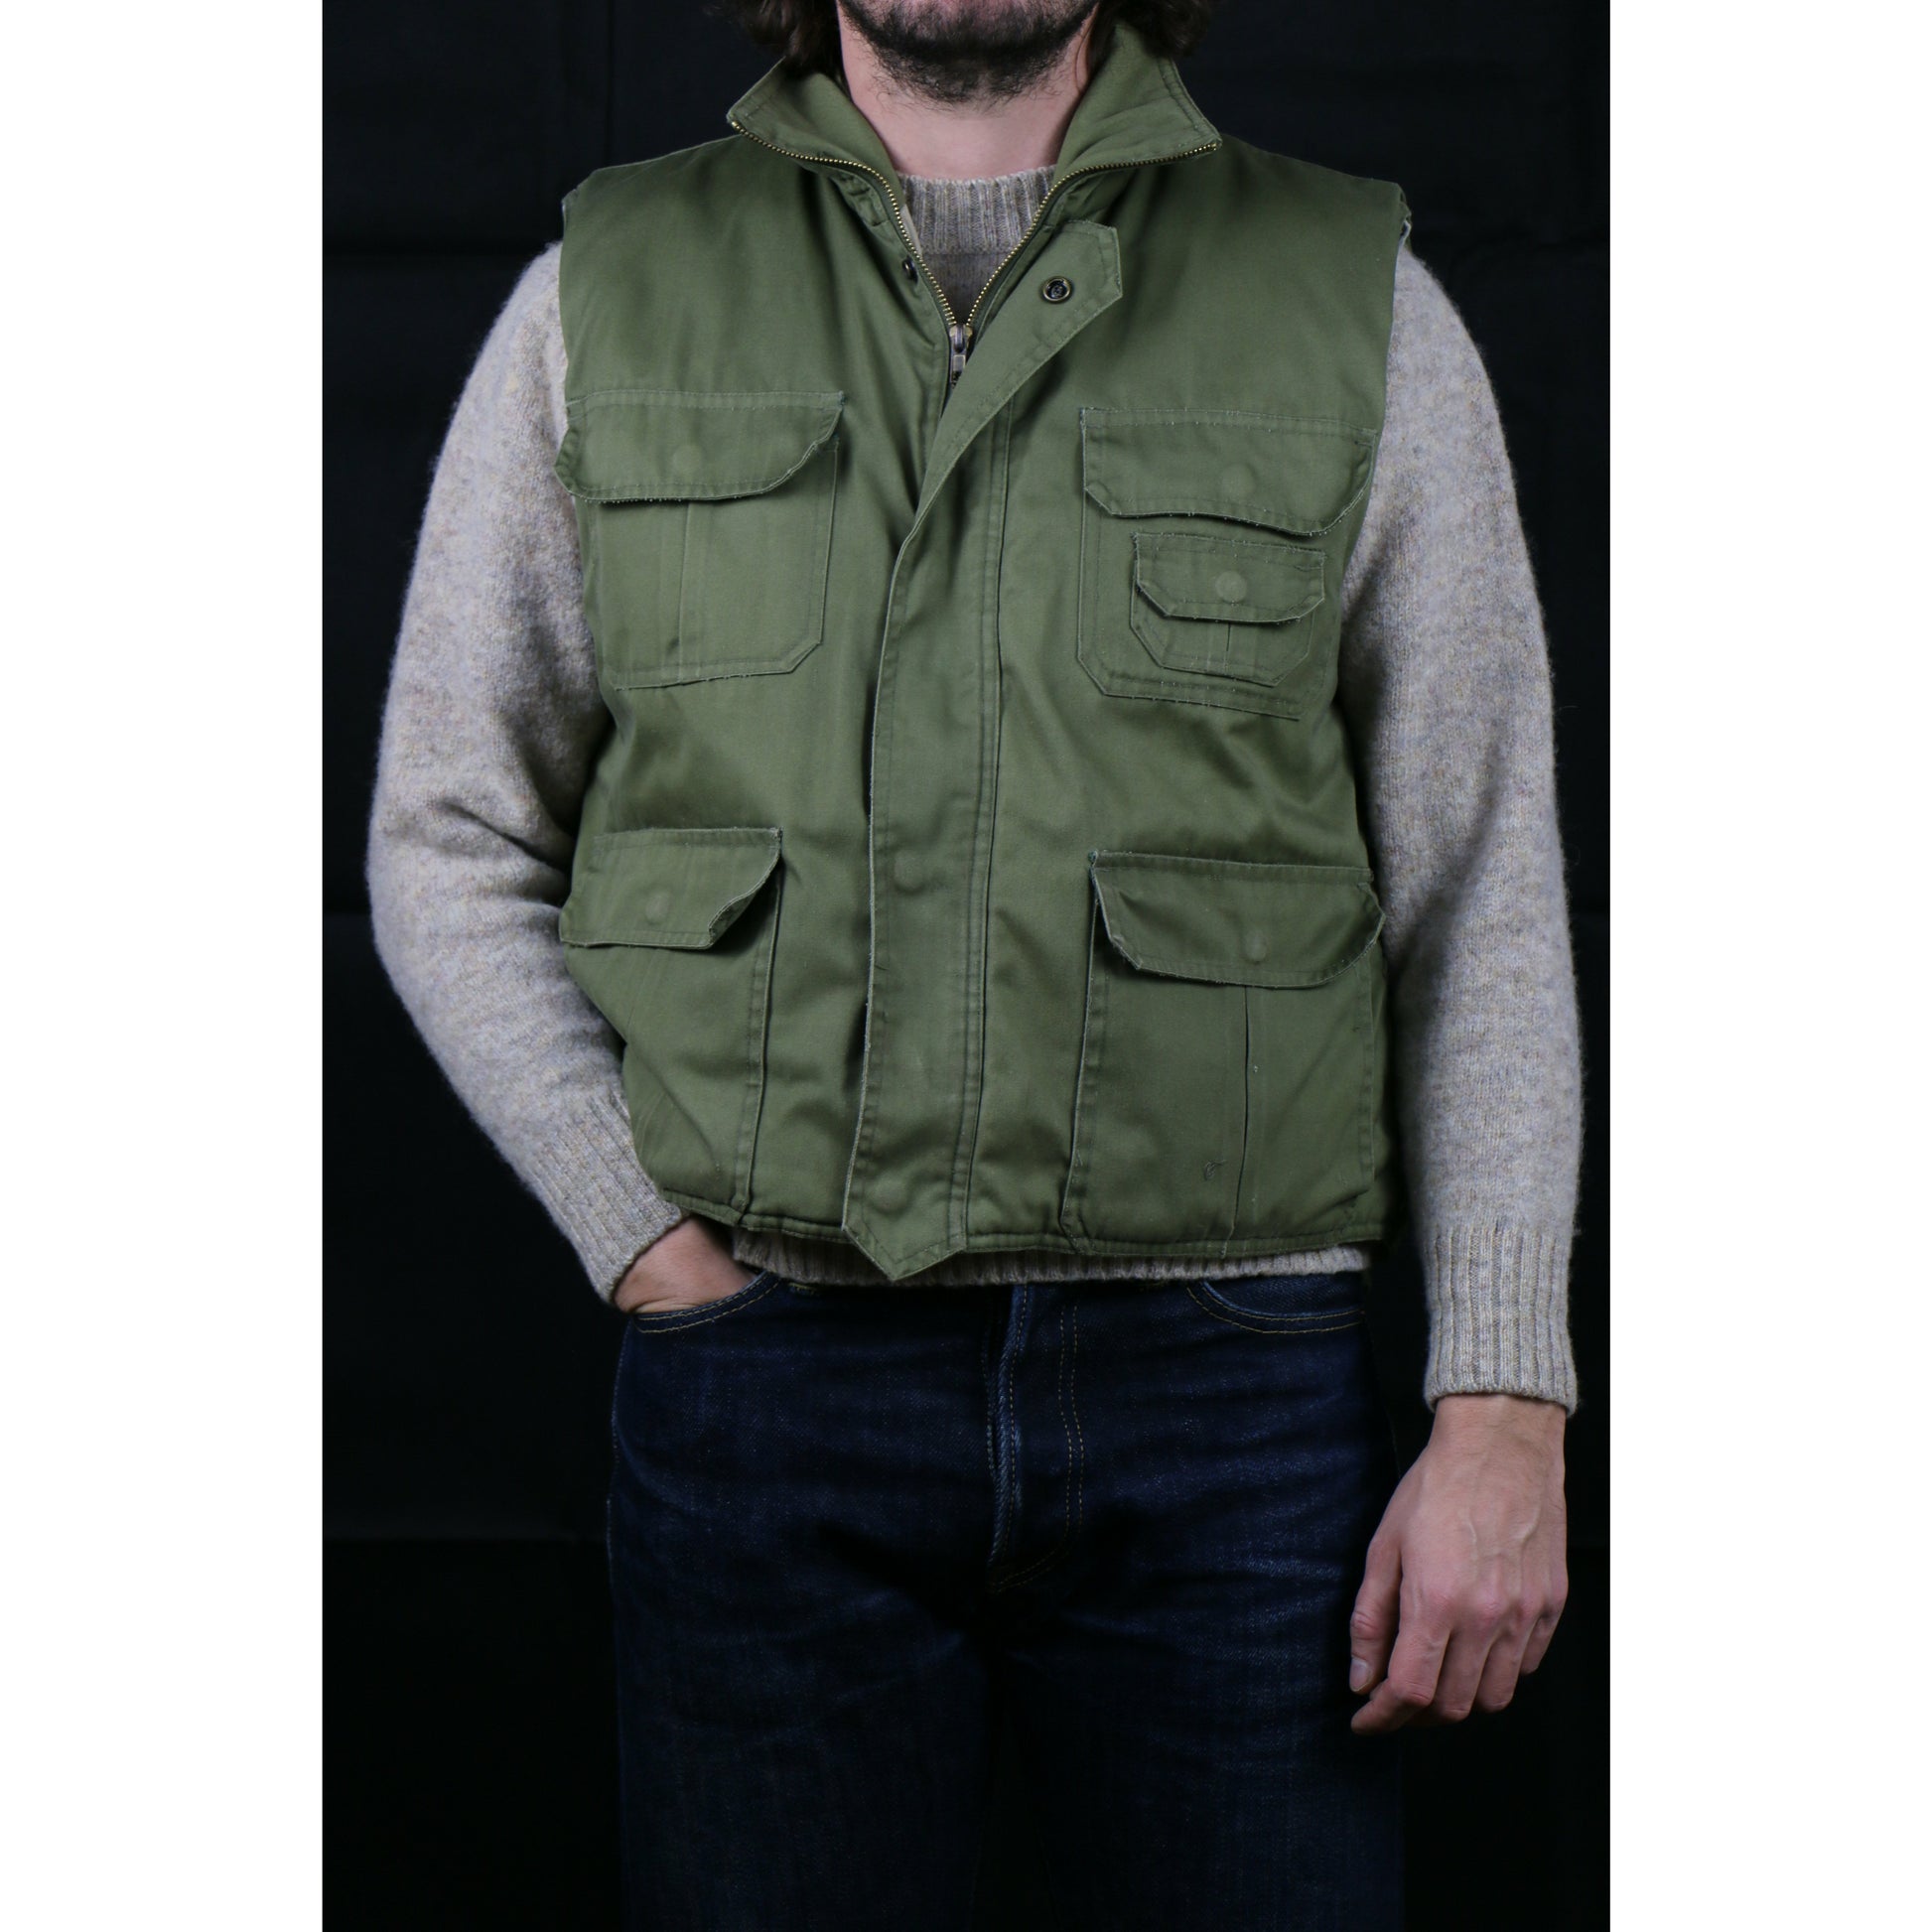 Army Utility Vest - vintage clothing clochard92.com